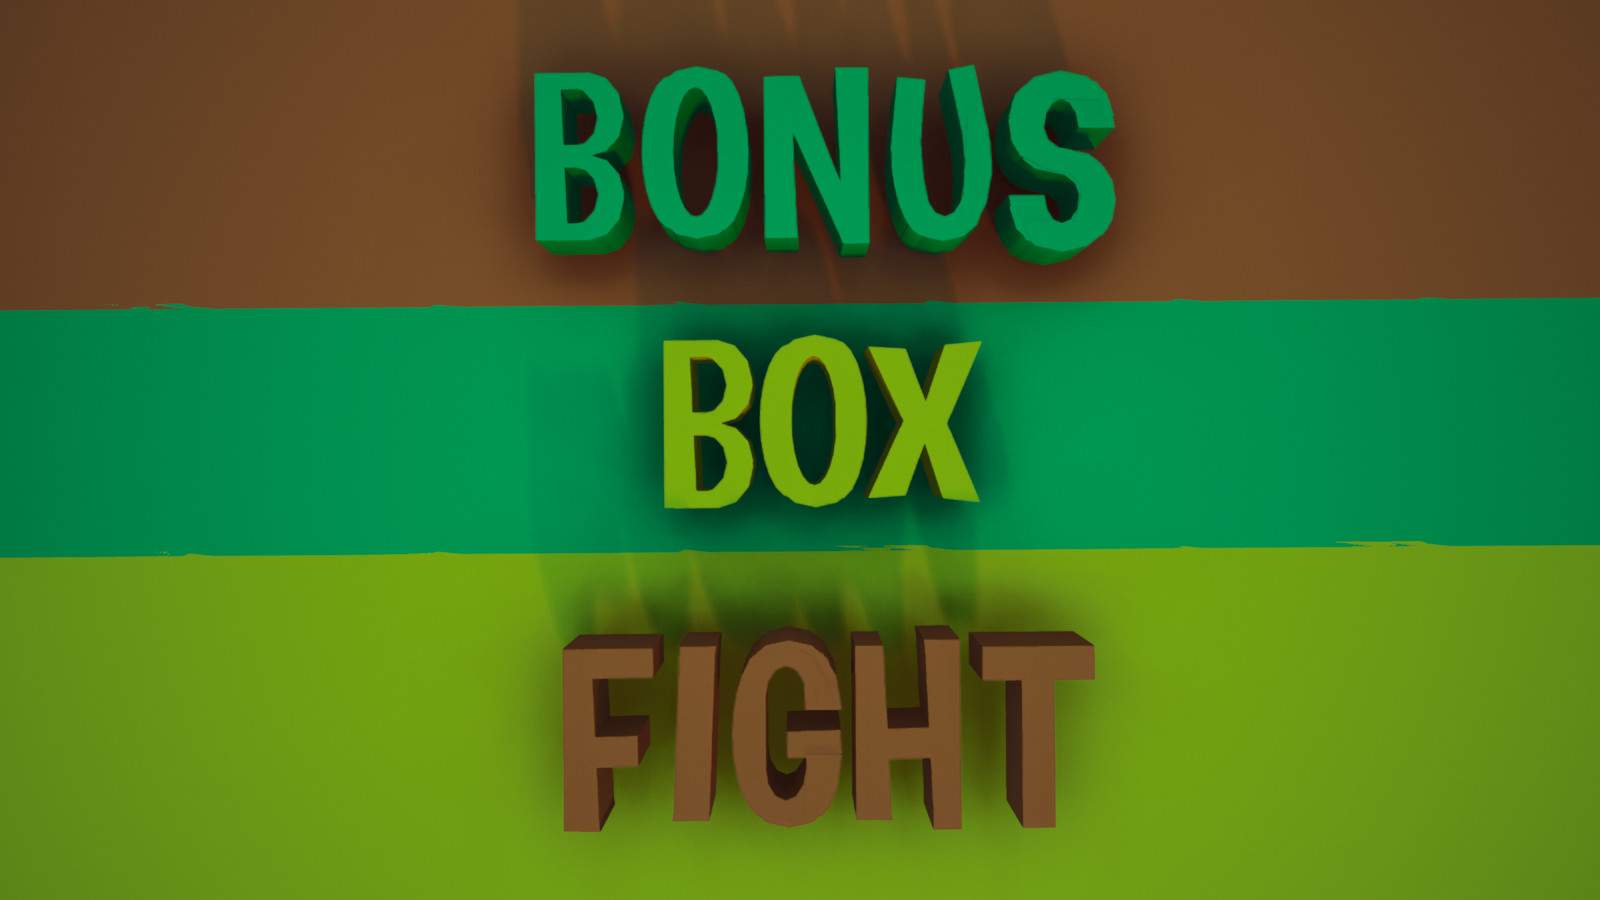 📦 BONUS BOXFIGHT! 📦